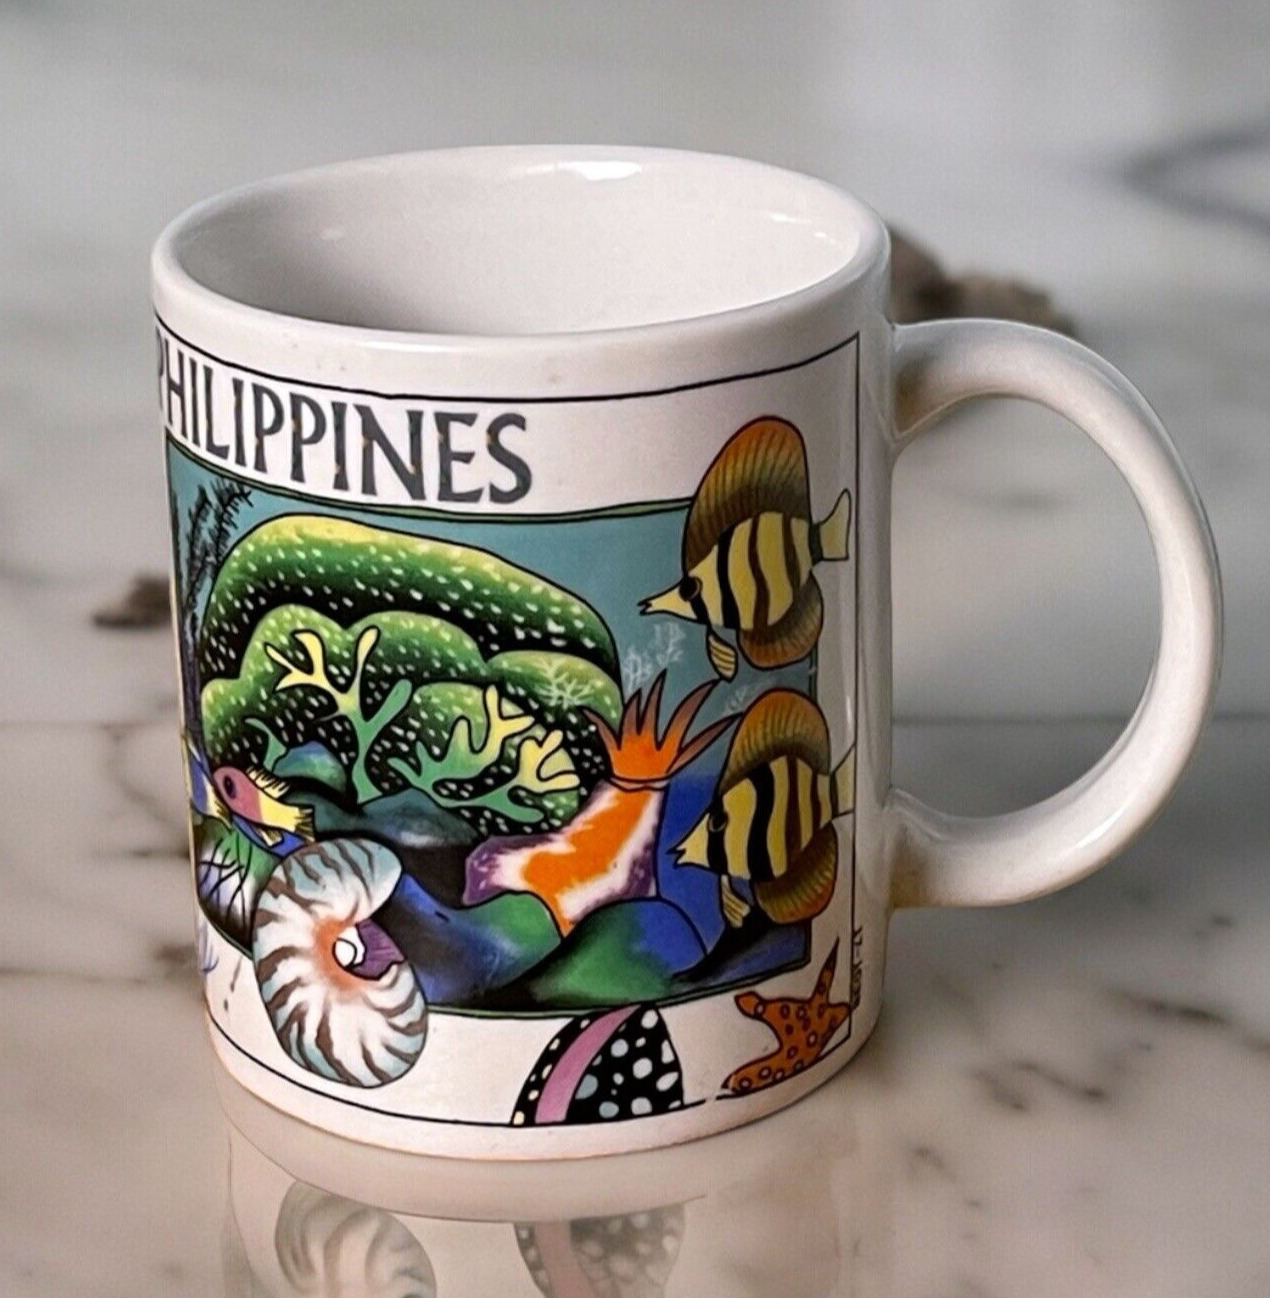 Philippines Coffee Cup Mug Mabuhay Islands Nautical Tropical Fish Ocean Seaside